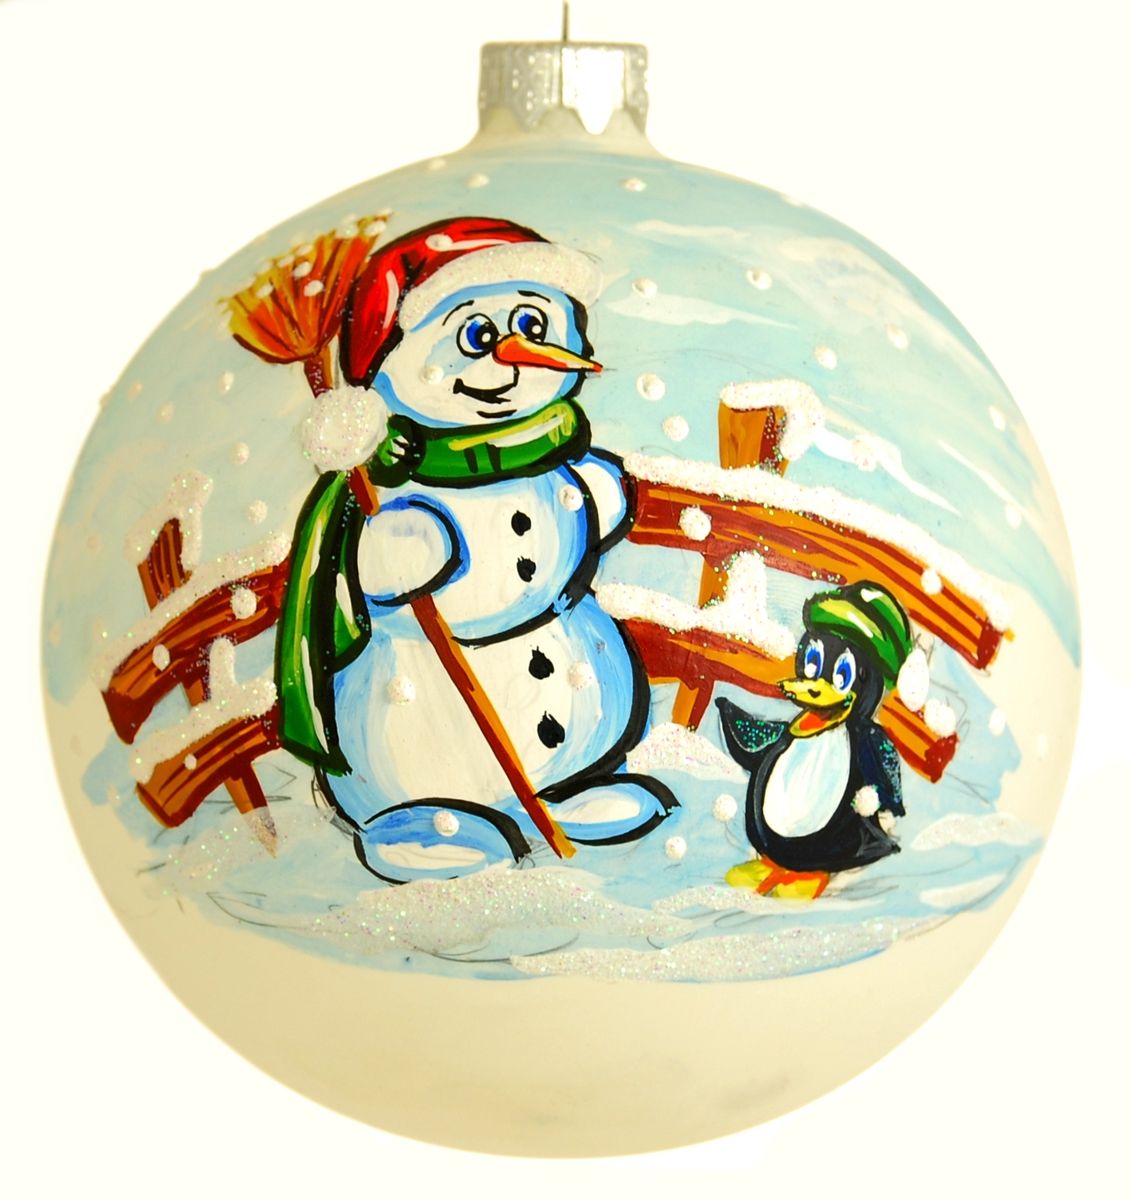 Шар снеговик. Ёлочная игрушка Снеговик. Новогодний шар со снеговиком. Елочная игрушка шар Снеговик. Новогодняя игрушка Снеговик в шаре.